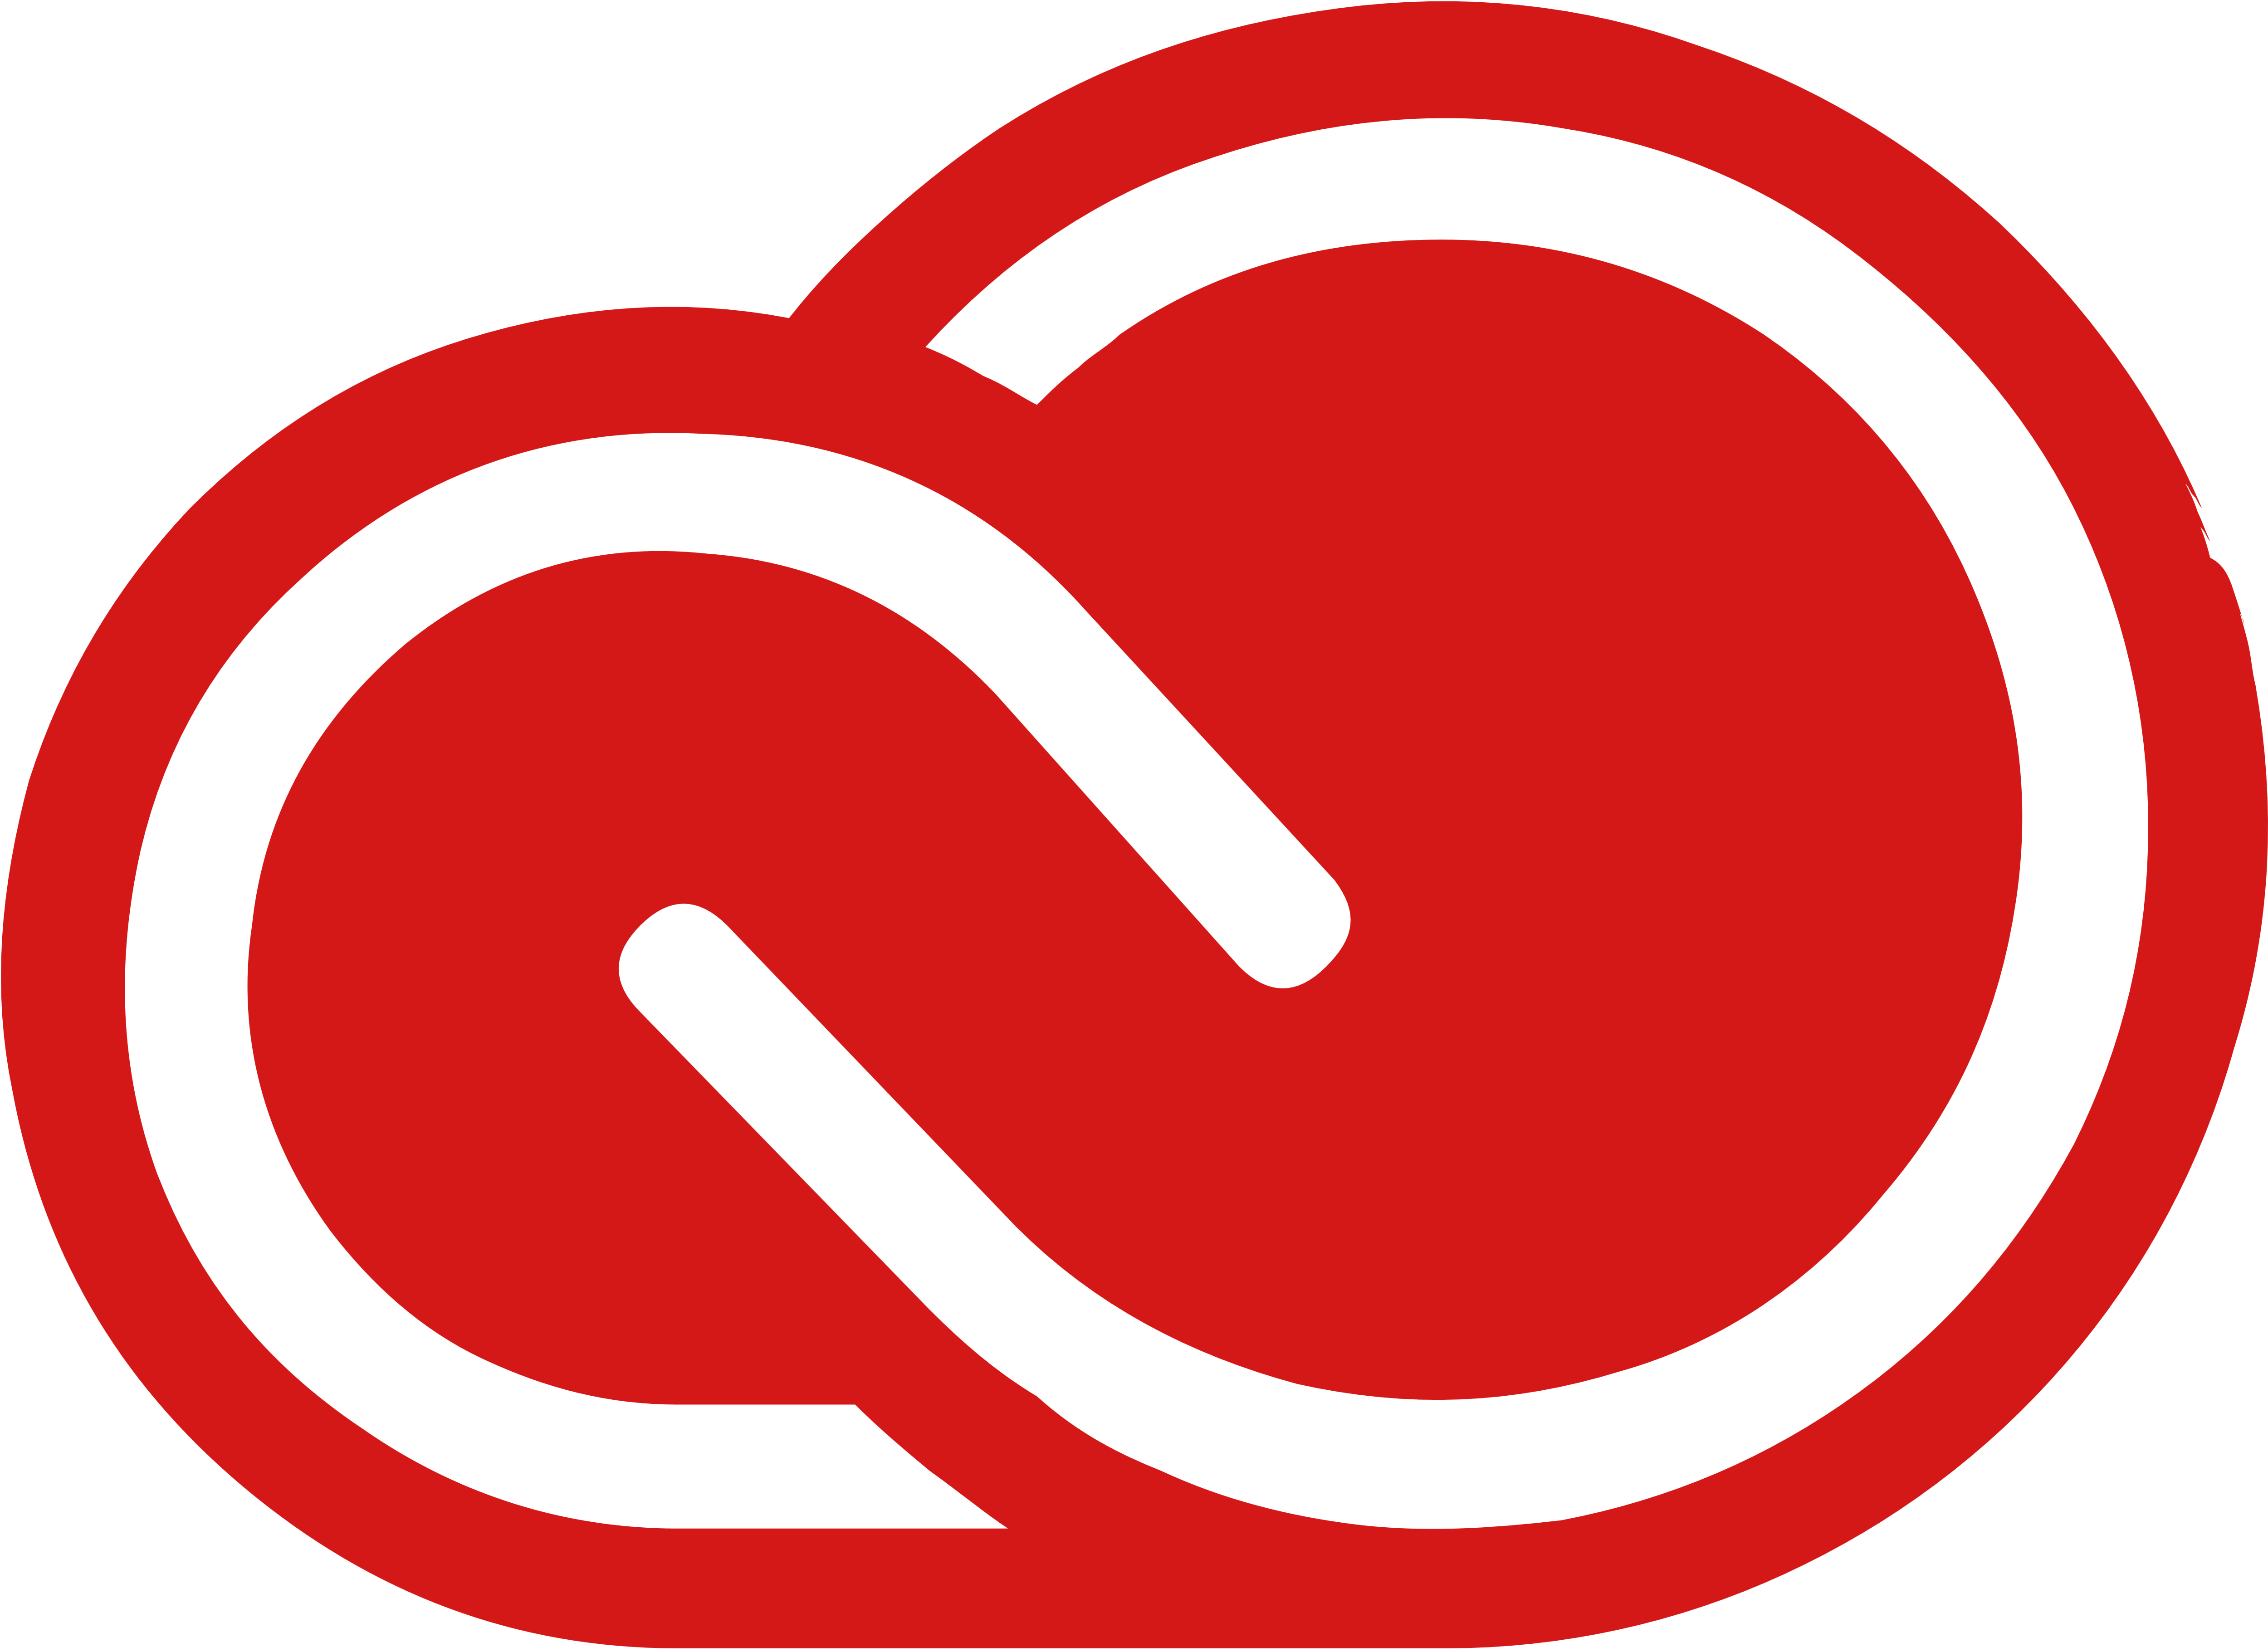 Adobe Creative Cloud – Logos Download, Adobe Creative Cloud Logo PNG - Free PNG